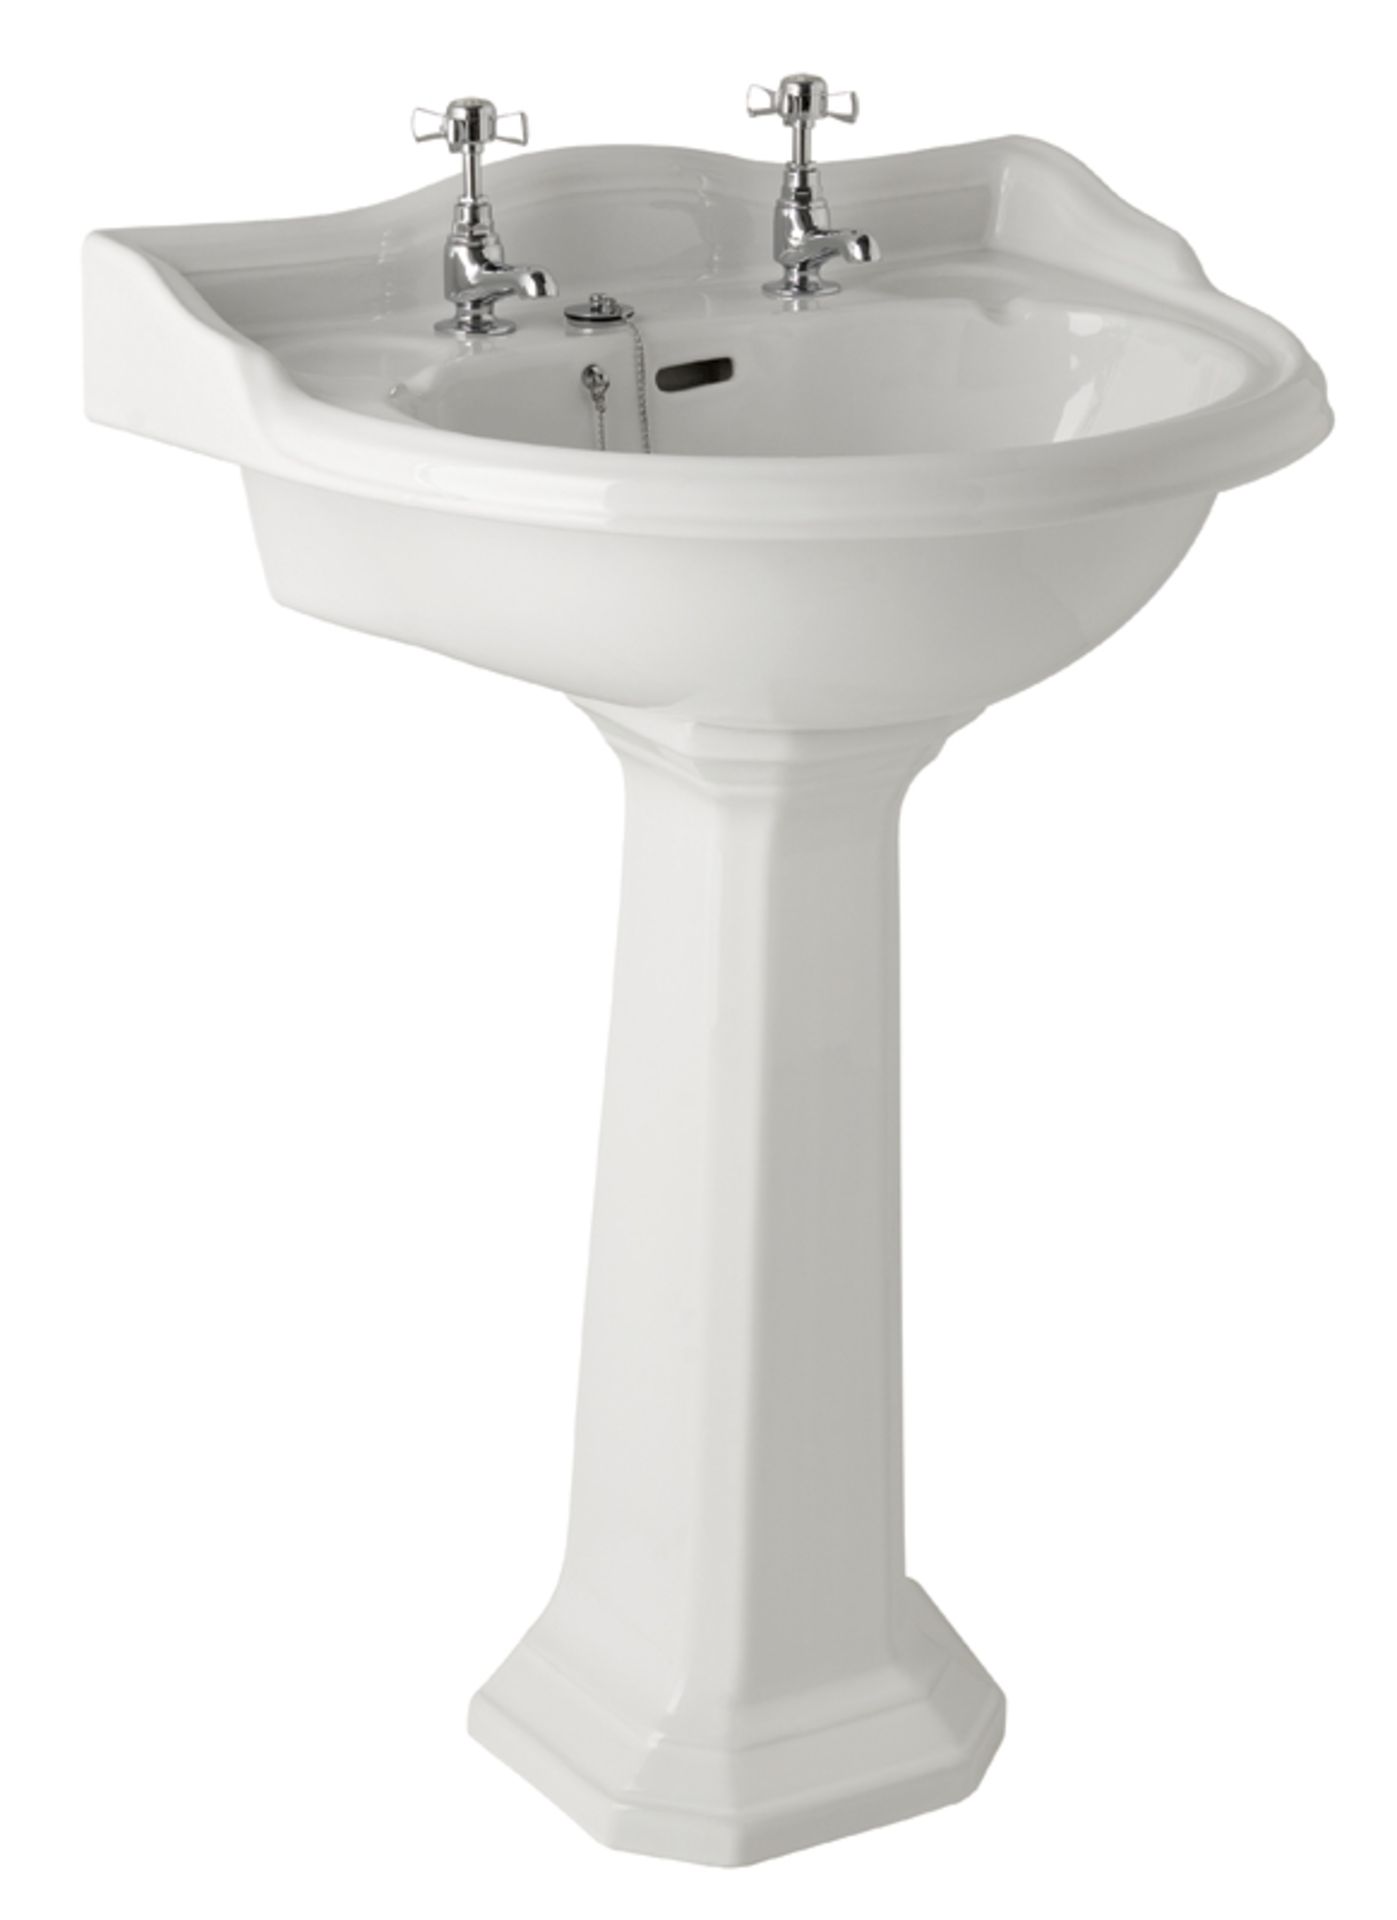 4 x Davenport 2 Tap Hole Sink Basins With Full Pedestal - 59cm Wide - Vogue Bathrooms - Brand New